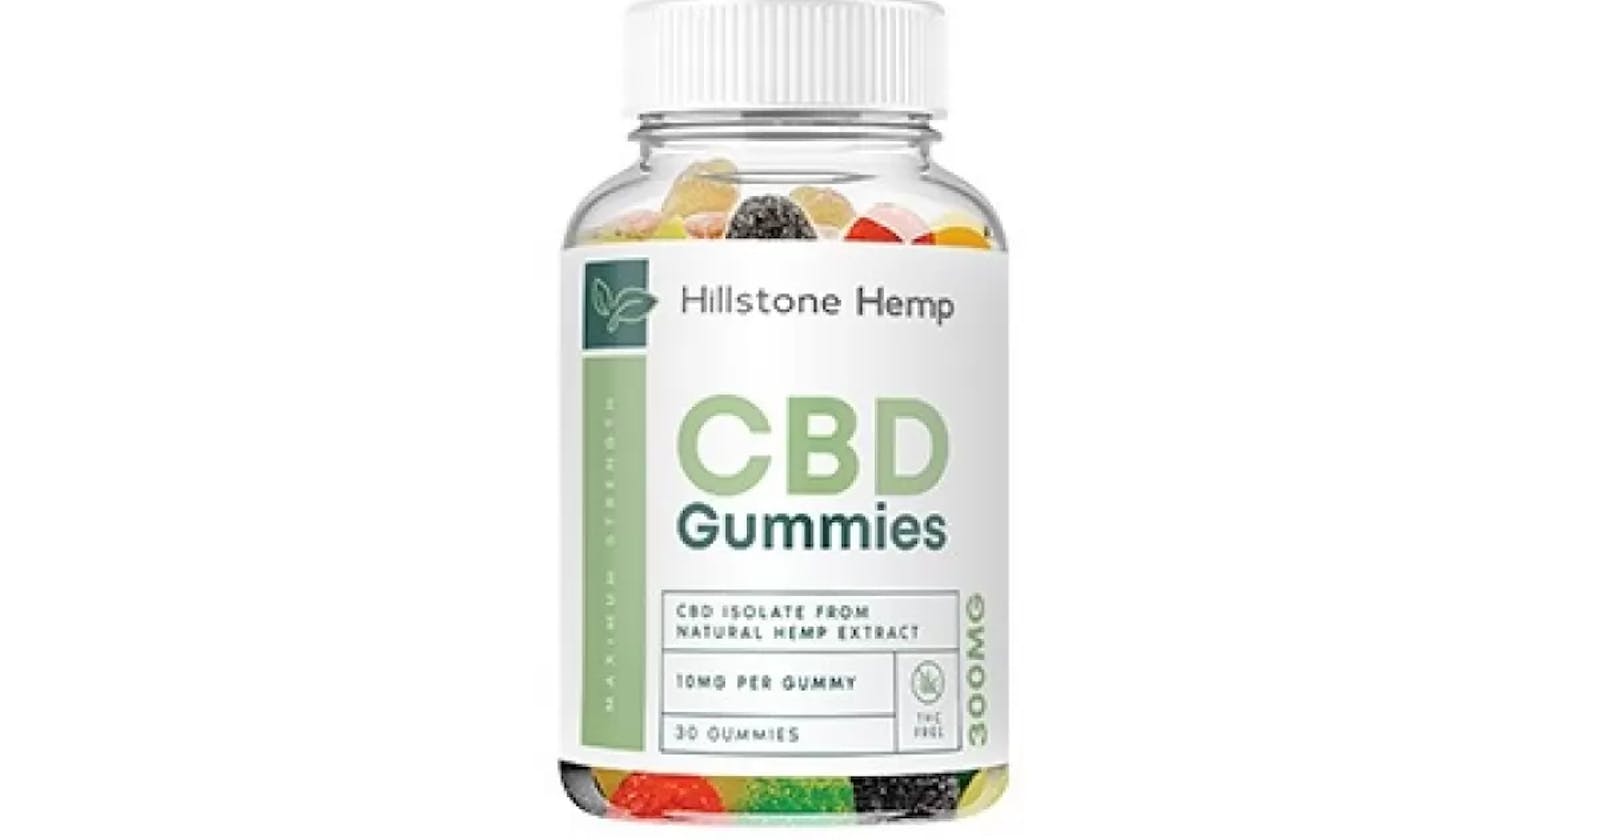 Hillstone Hemp CBD Gummies Hoax or legit? Must Read Reviews & Cost!